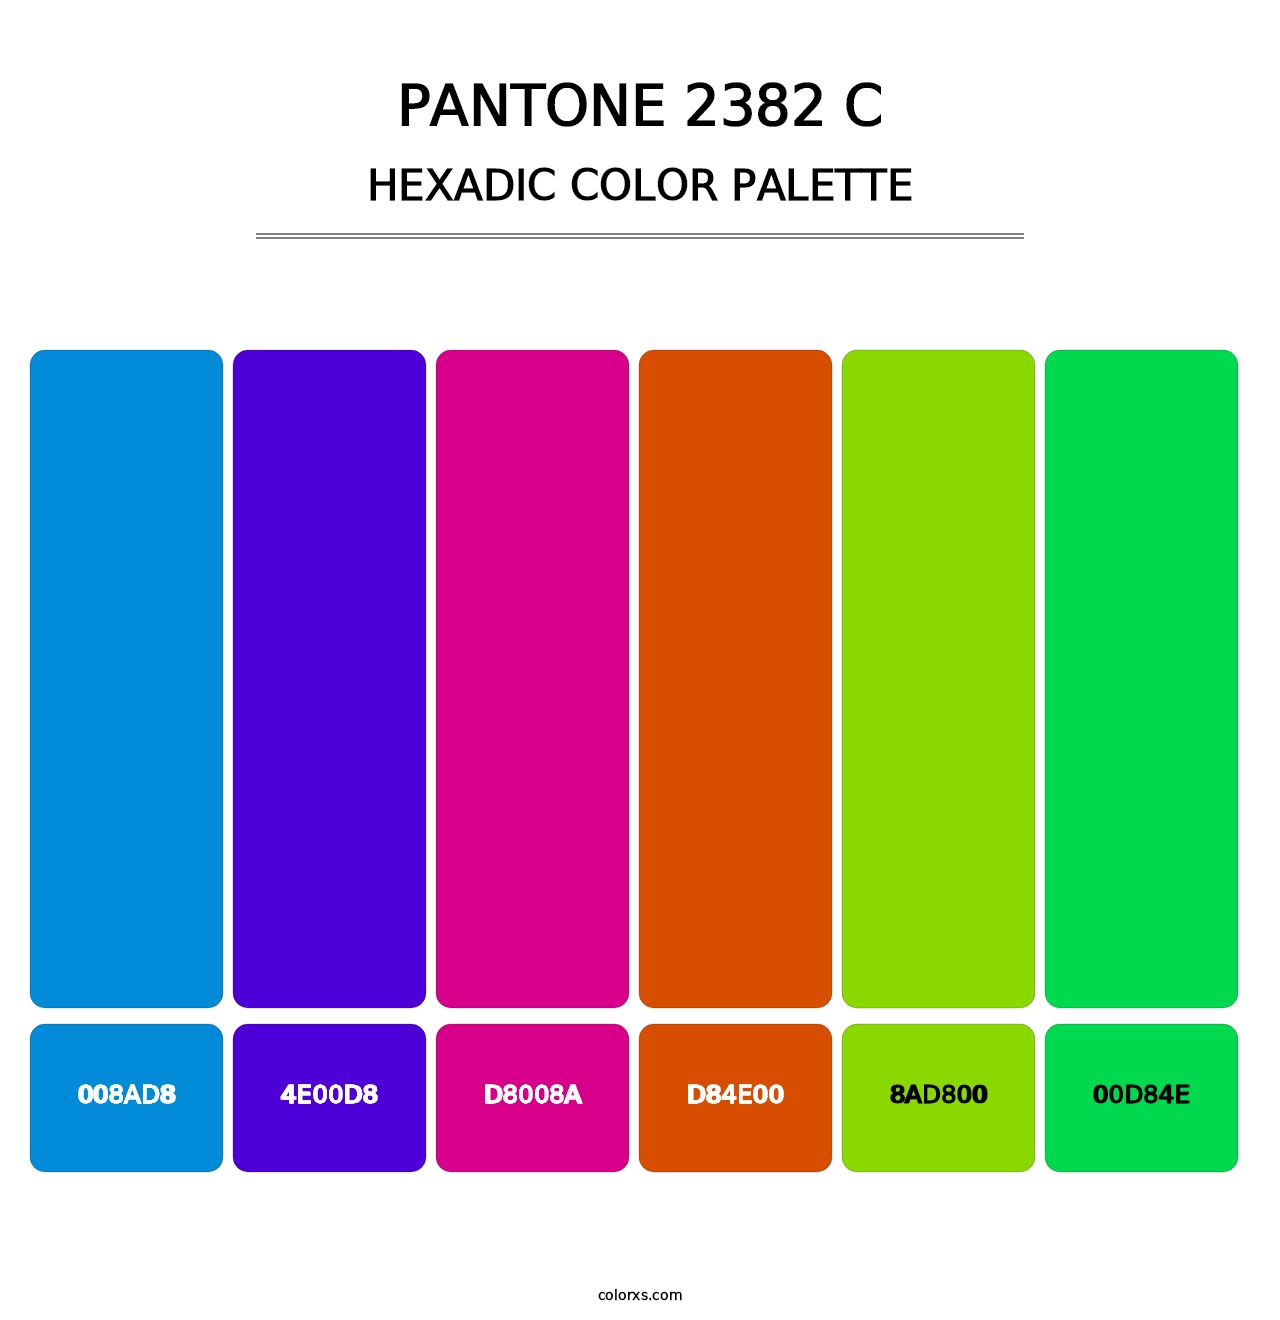 PANTONE 2382 C - Hexadic Color Palette